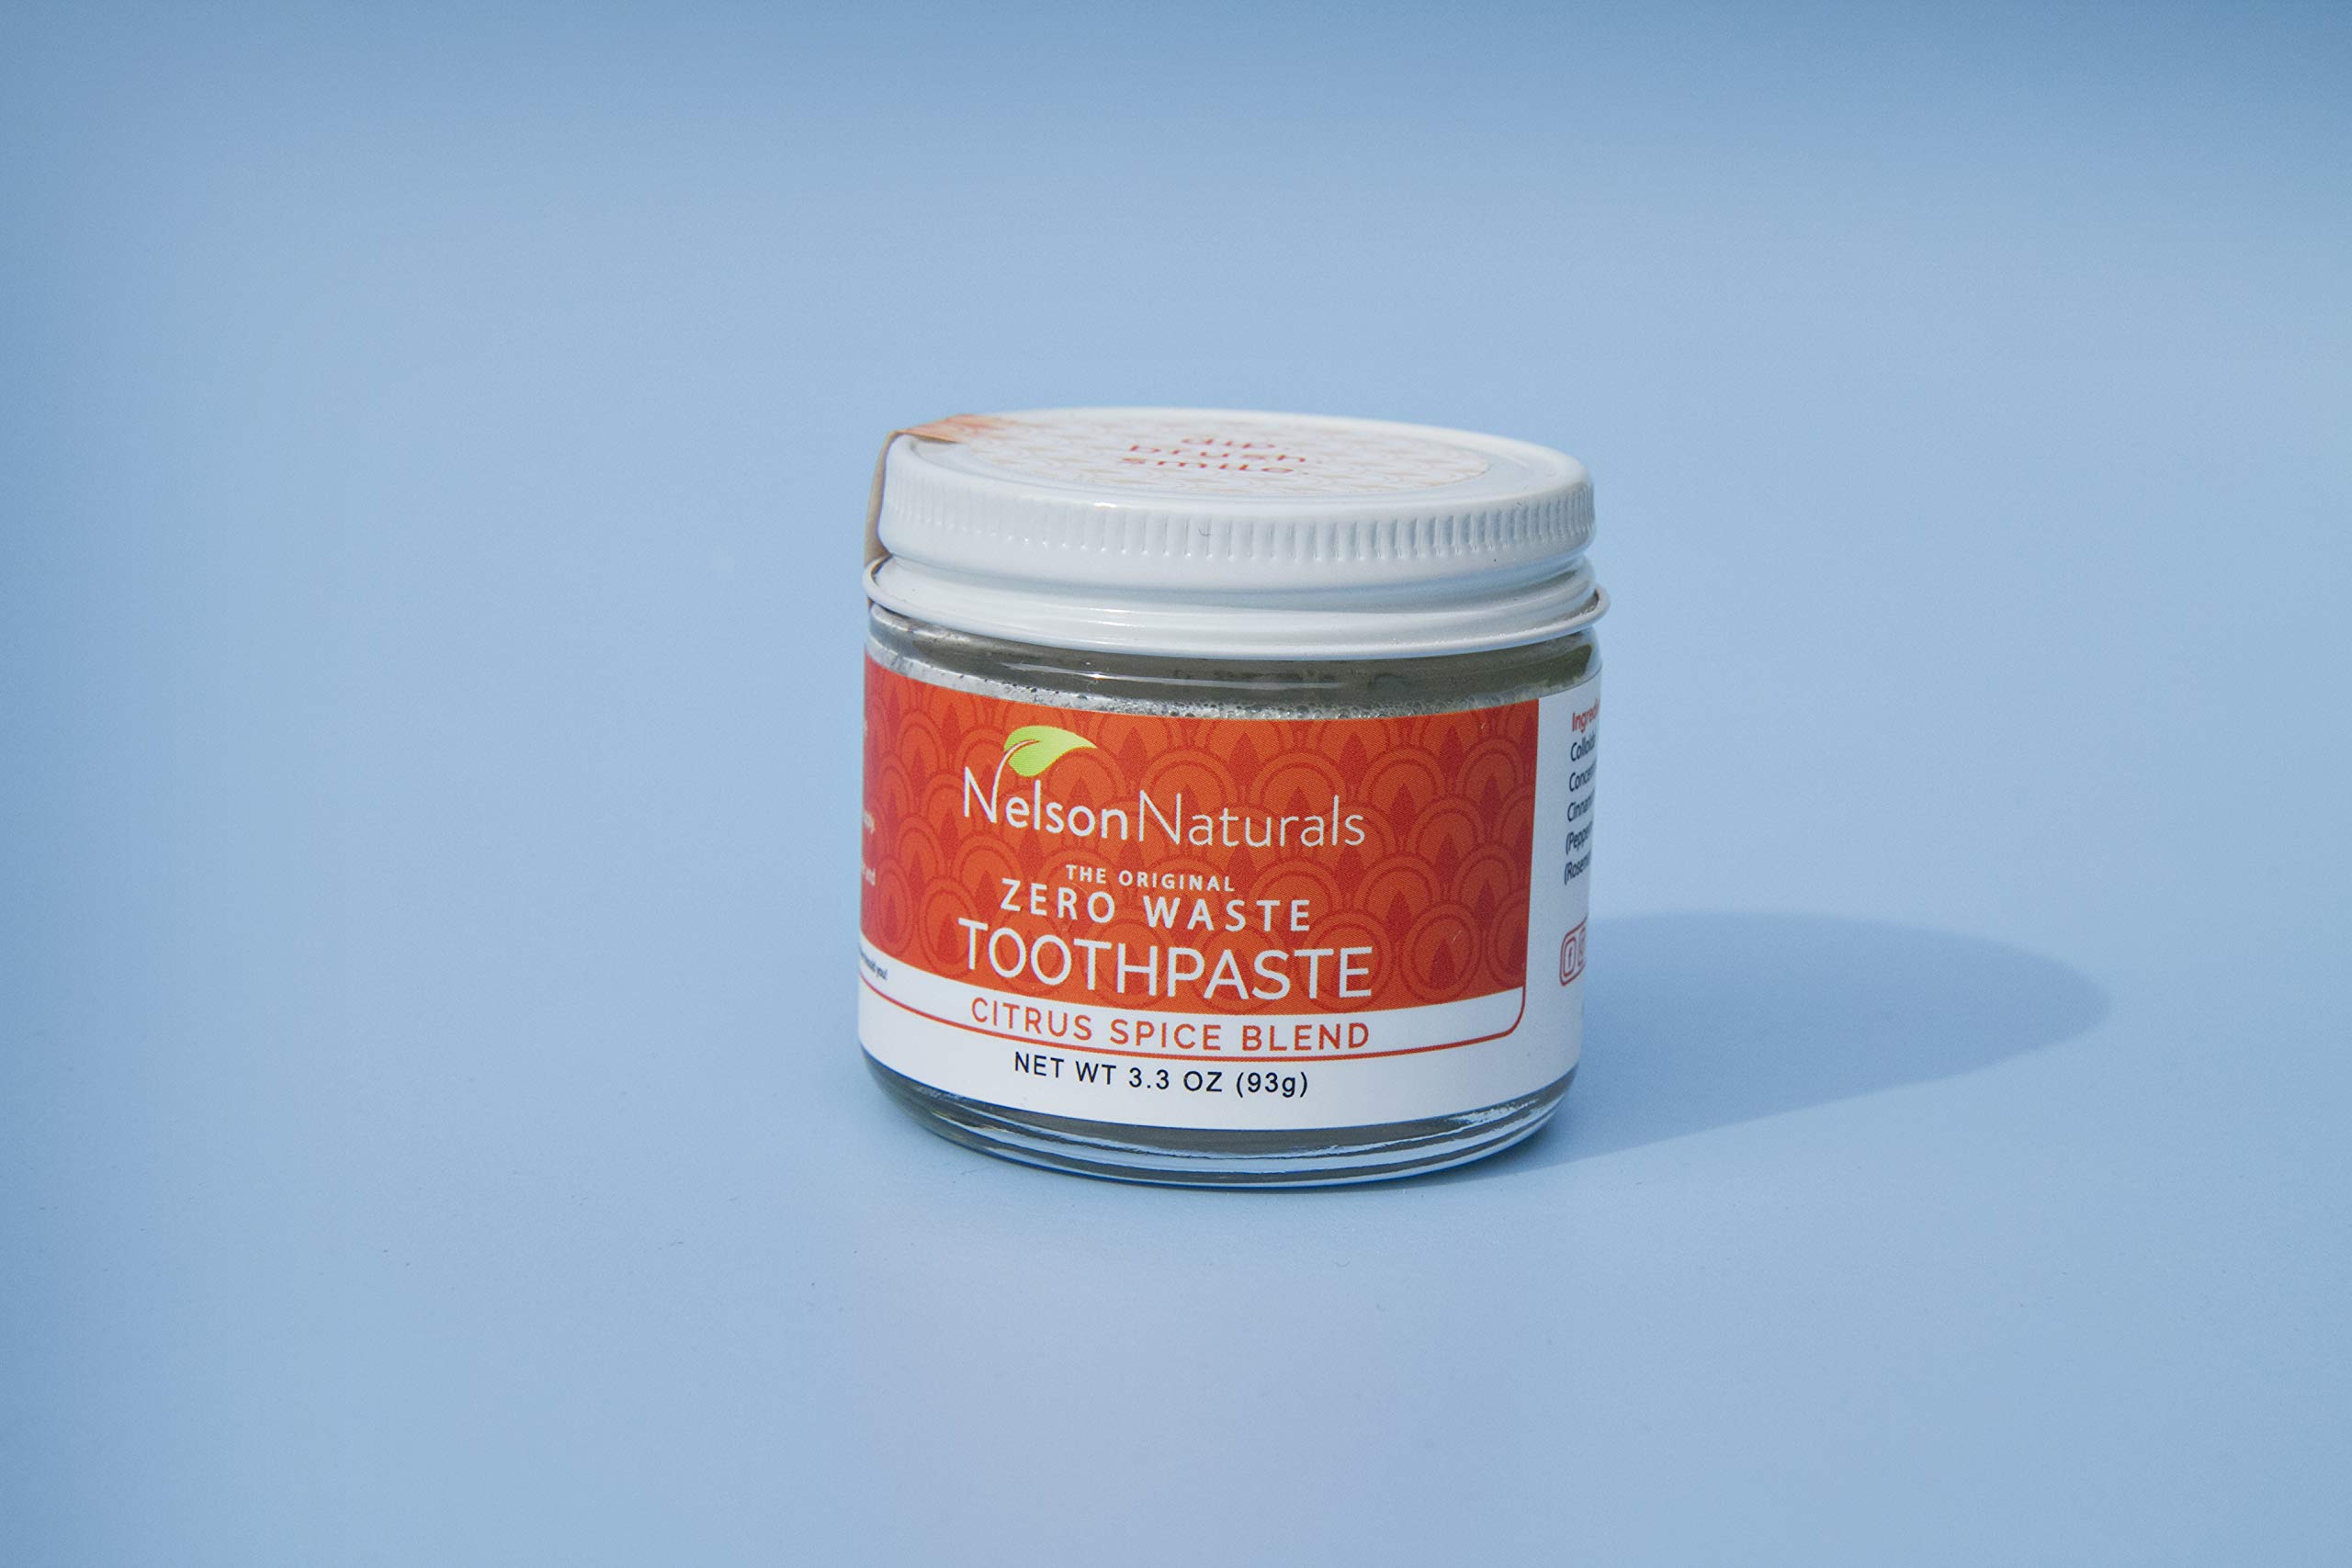 Nelson Naturals Citrus Spice Blend Fluoride Free Toothpaste 3.3 oz